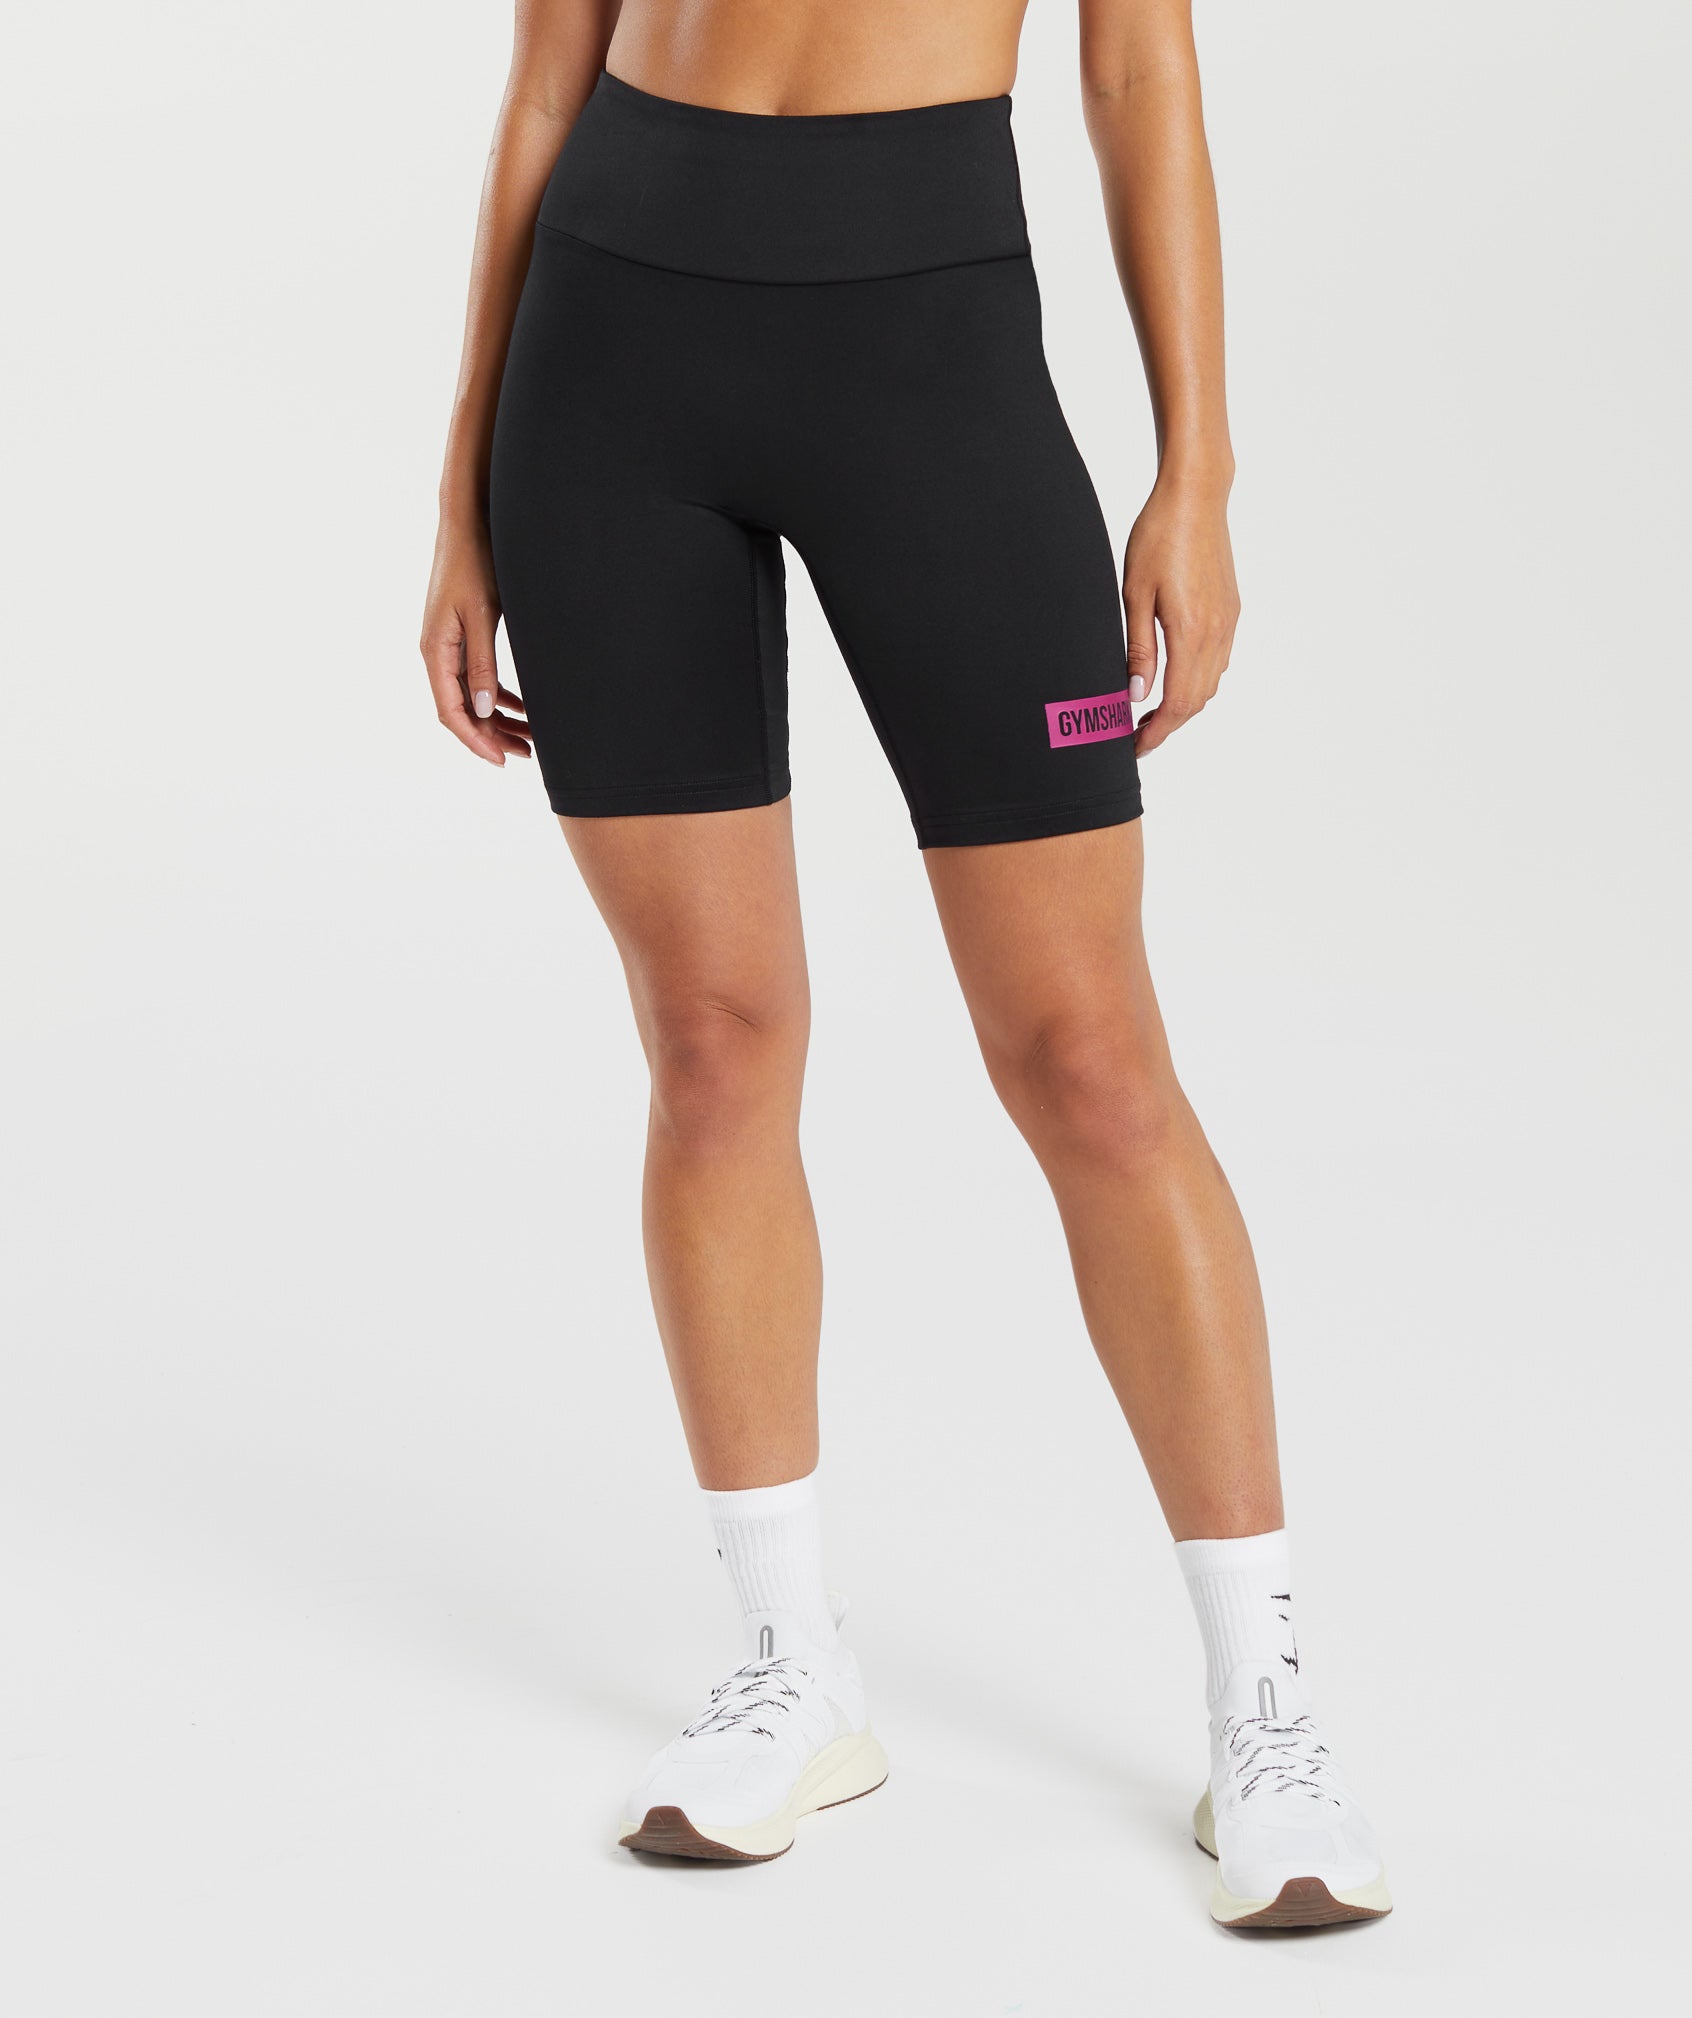 Gym Shorts & Bike Shorts for Women